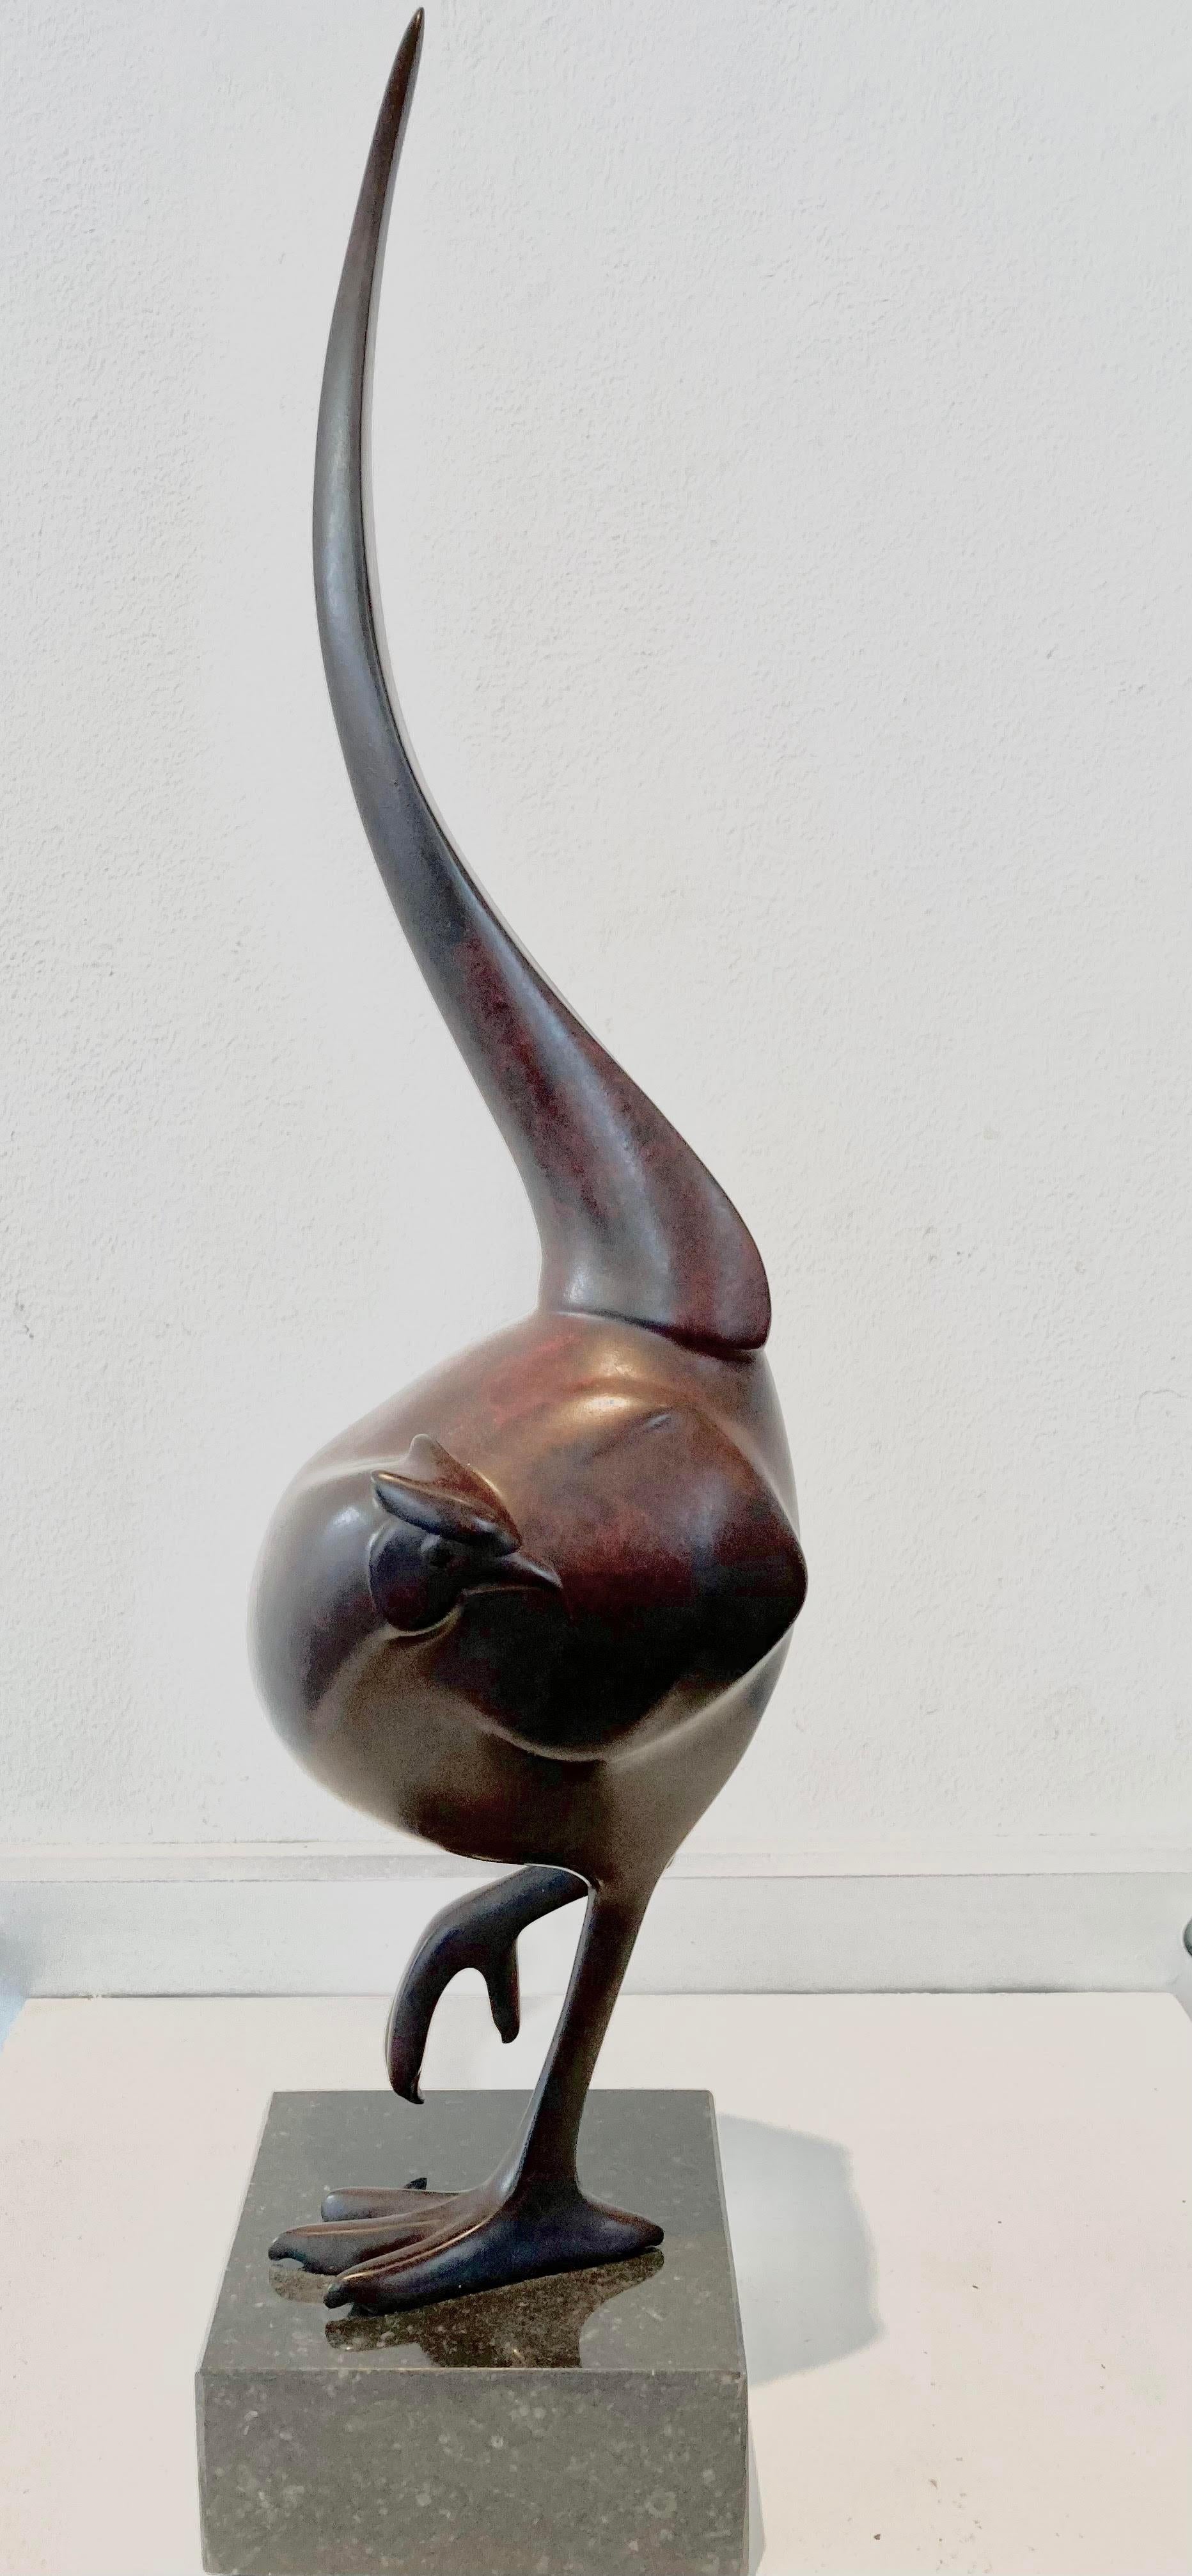 Evert den Hartog Figurative Sculpture - Fazant no. 9 (Pheasant) Bird Animal Bronze Sculpture Limited Edition